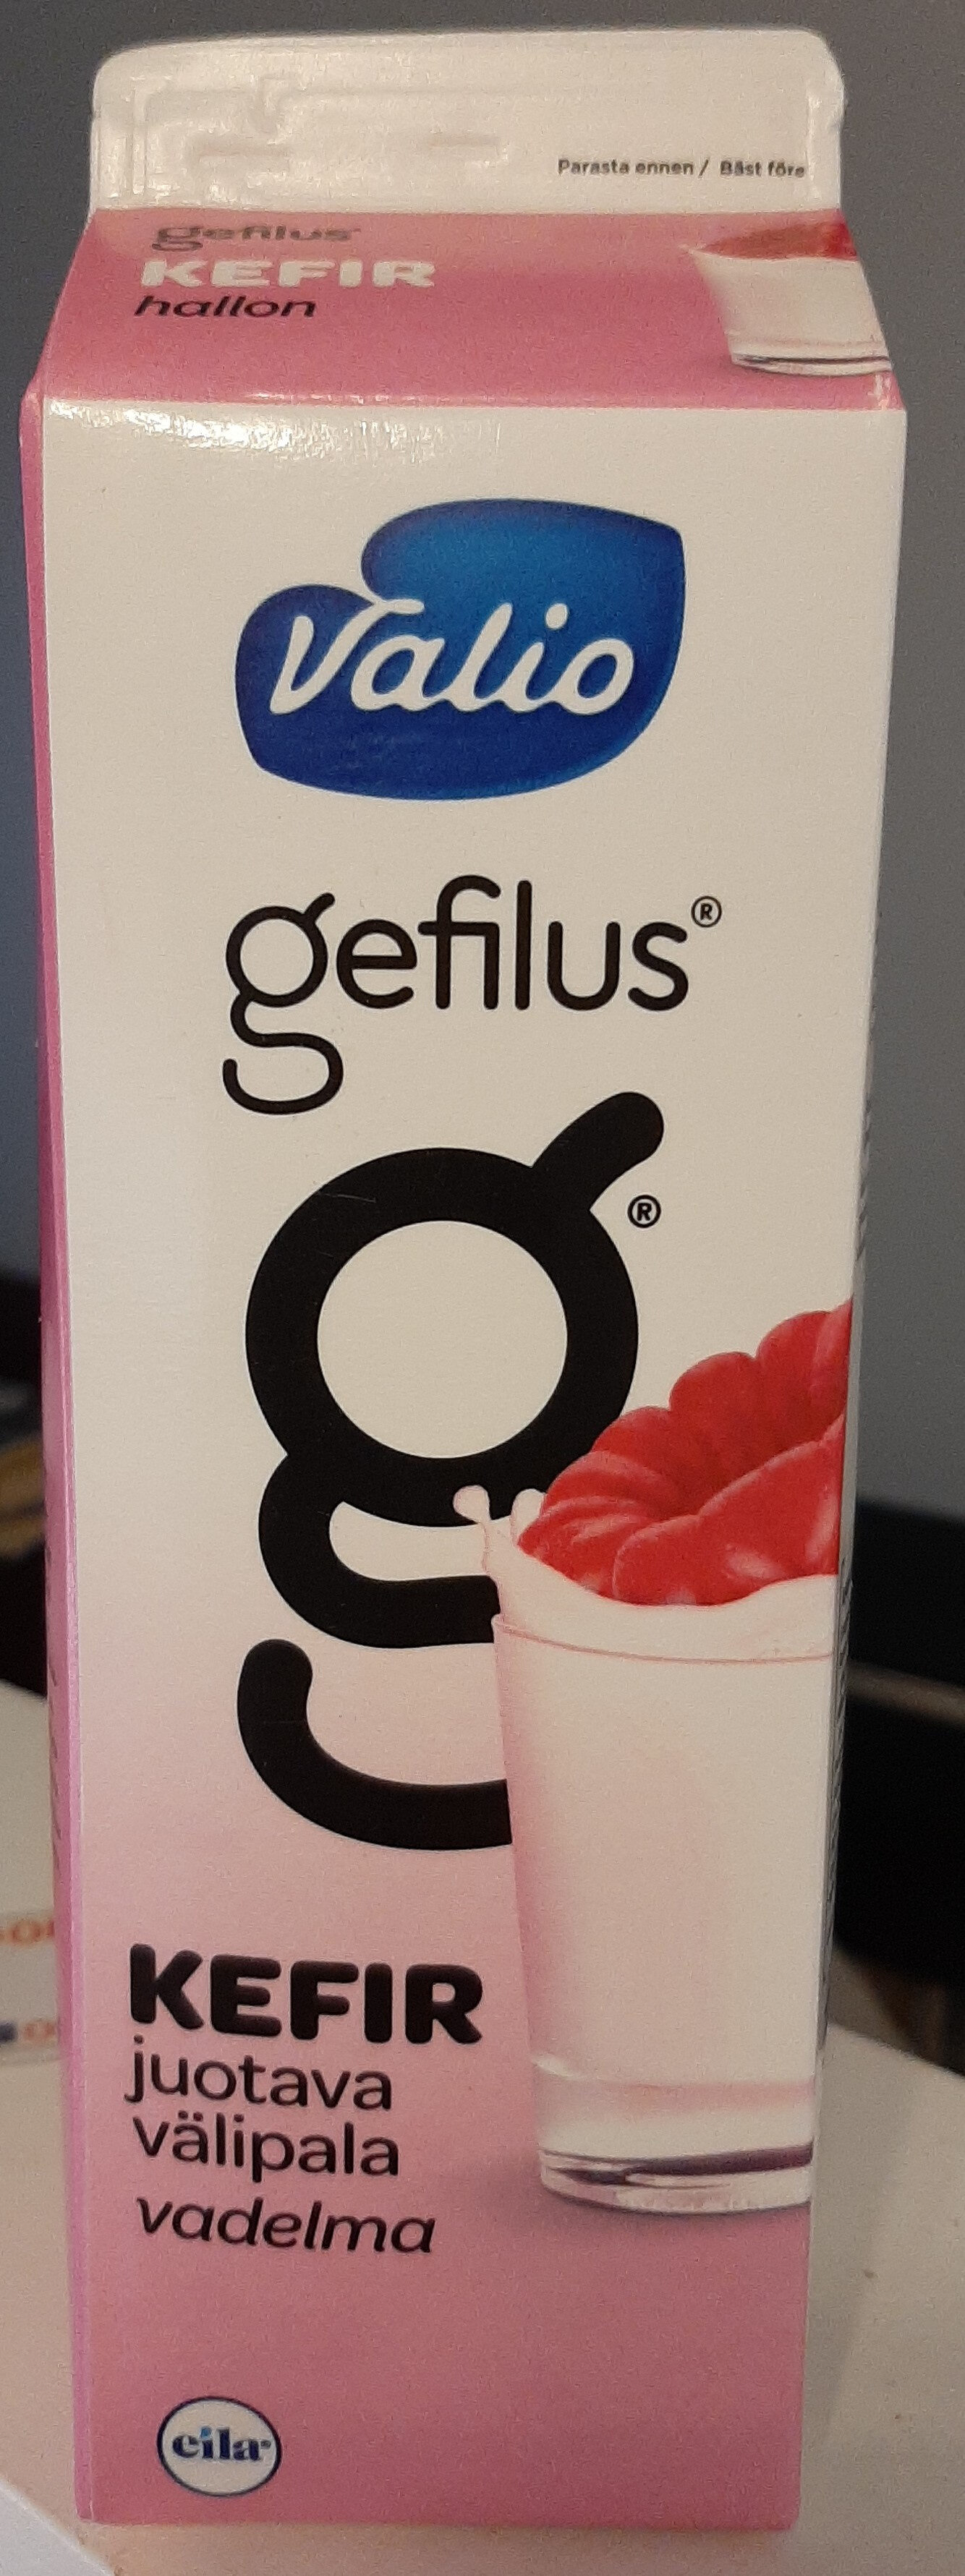 Gefilus Kefir juotava välipala vadelma - Produkt - fi